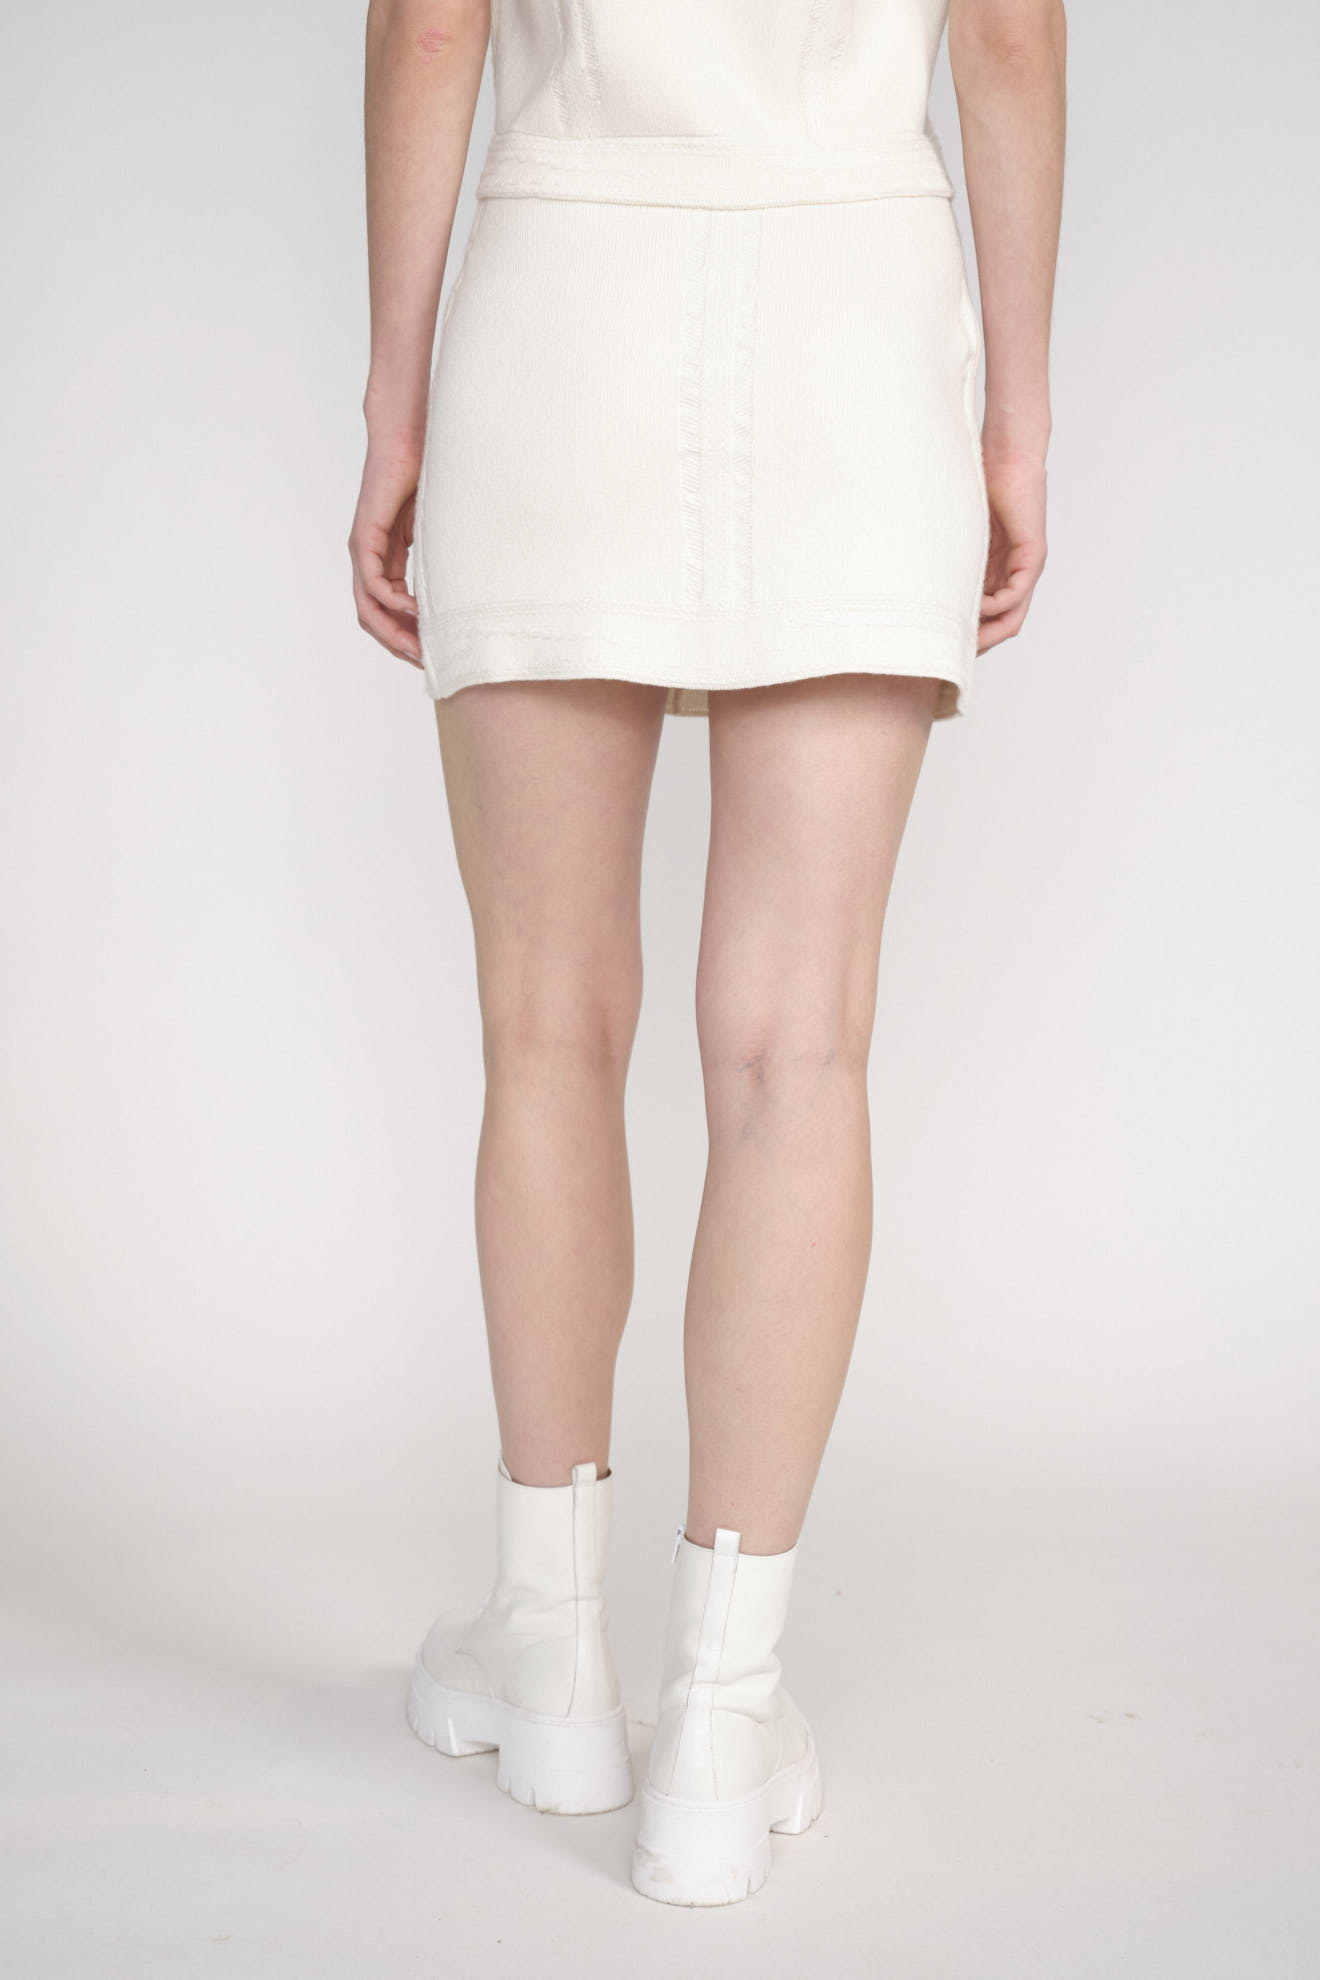 Barrie Denim Cashmere and Cotton Skirt - Minijupe en cachemire blanc M